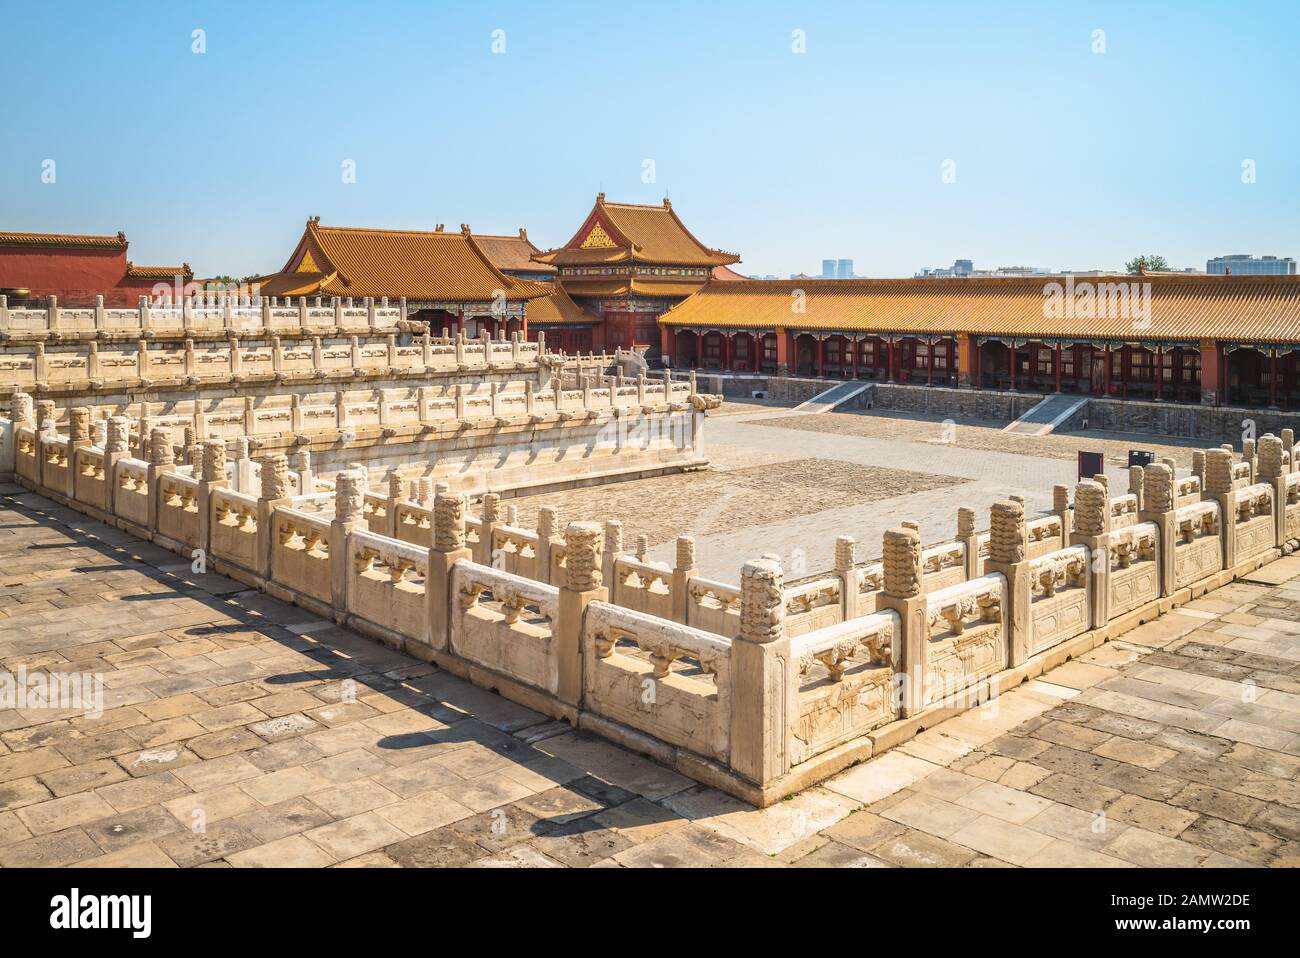 forbidden city in beijing, capital of china Stock Photo